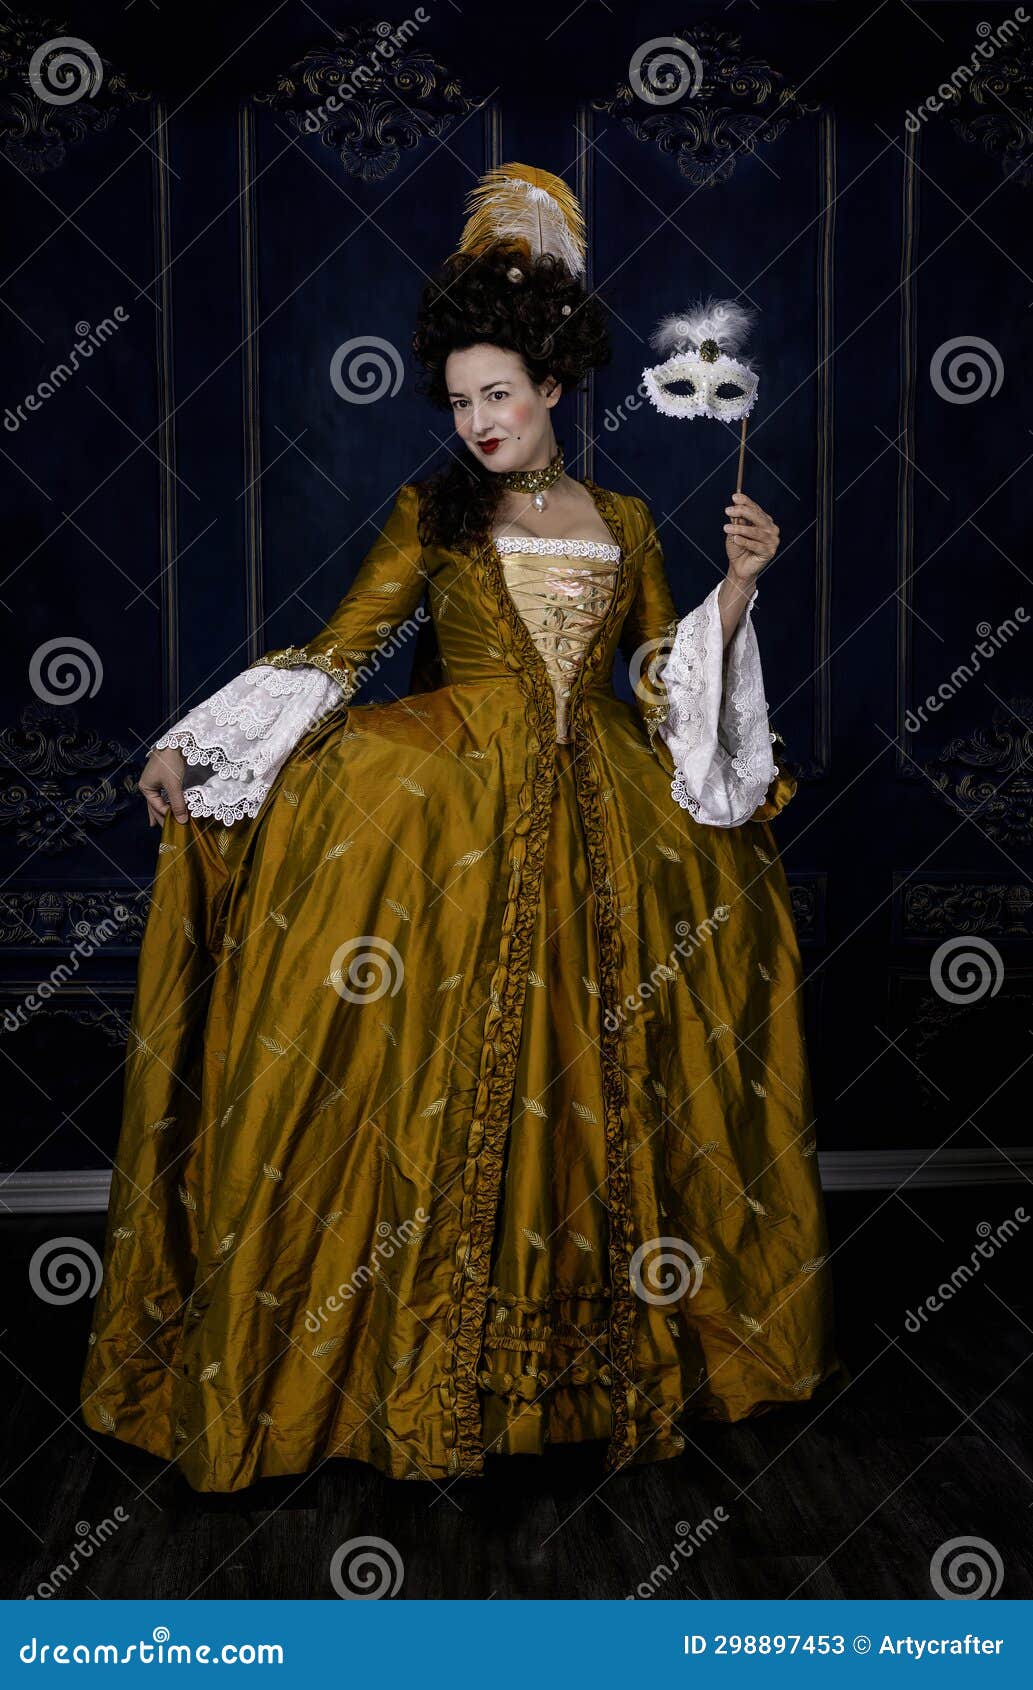 georgian period woman wearing a silk dress and holding a mask